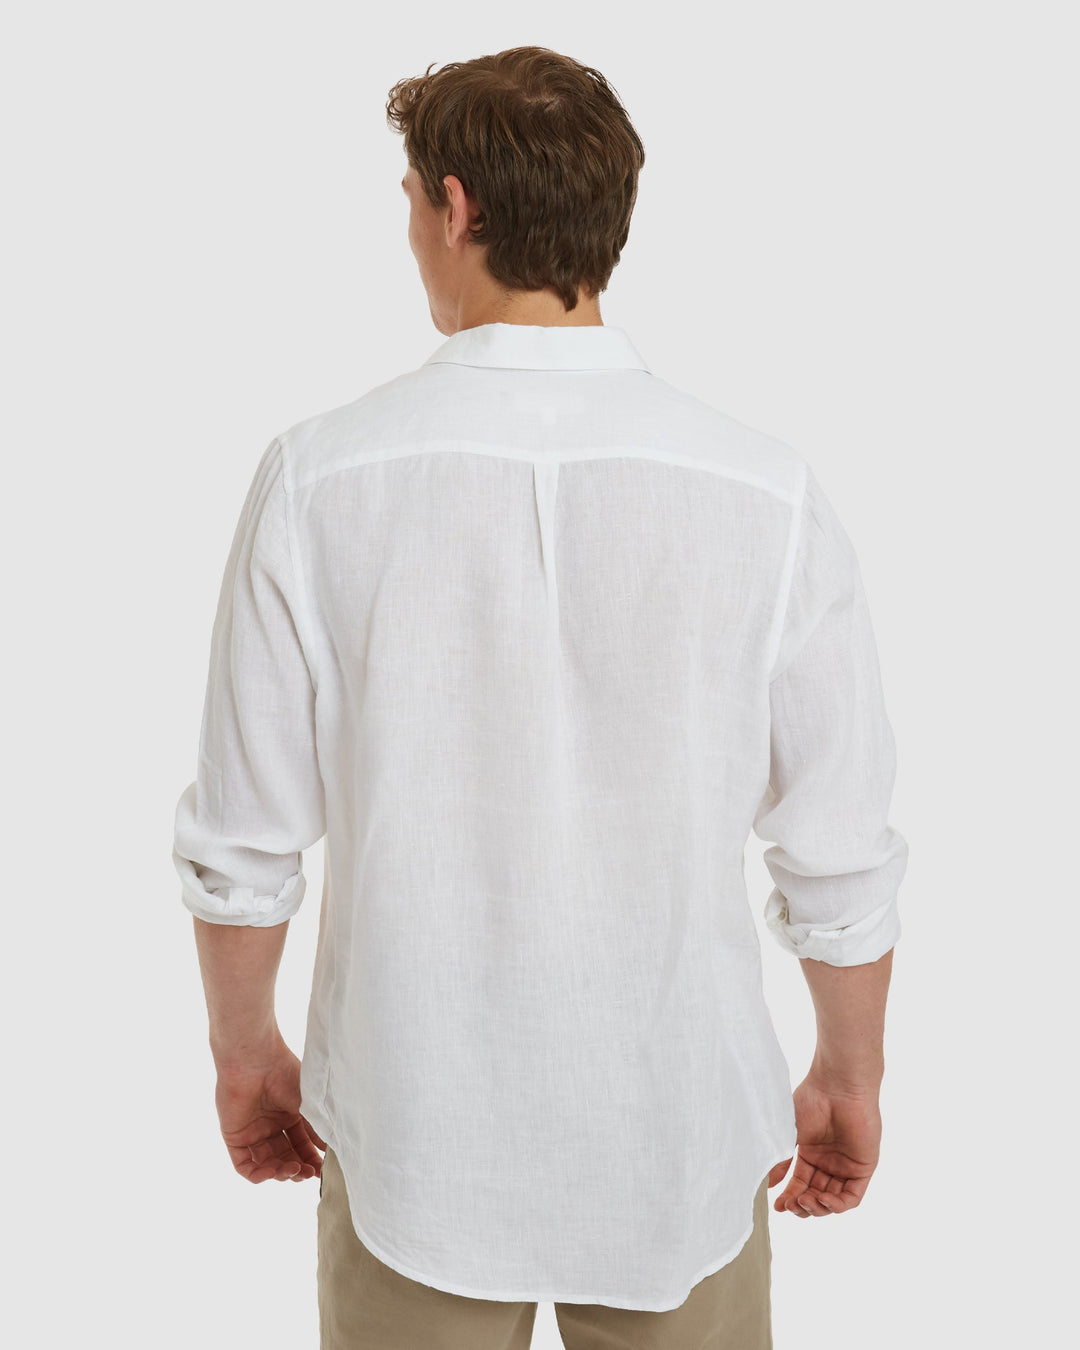 Tulum-Casual White Linen Shirt Long sleeve